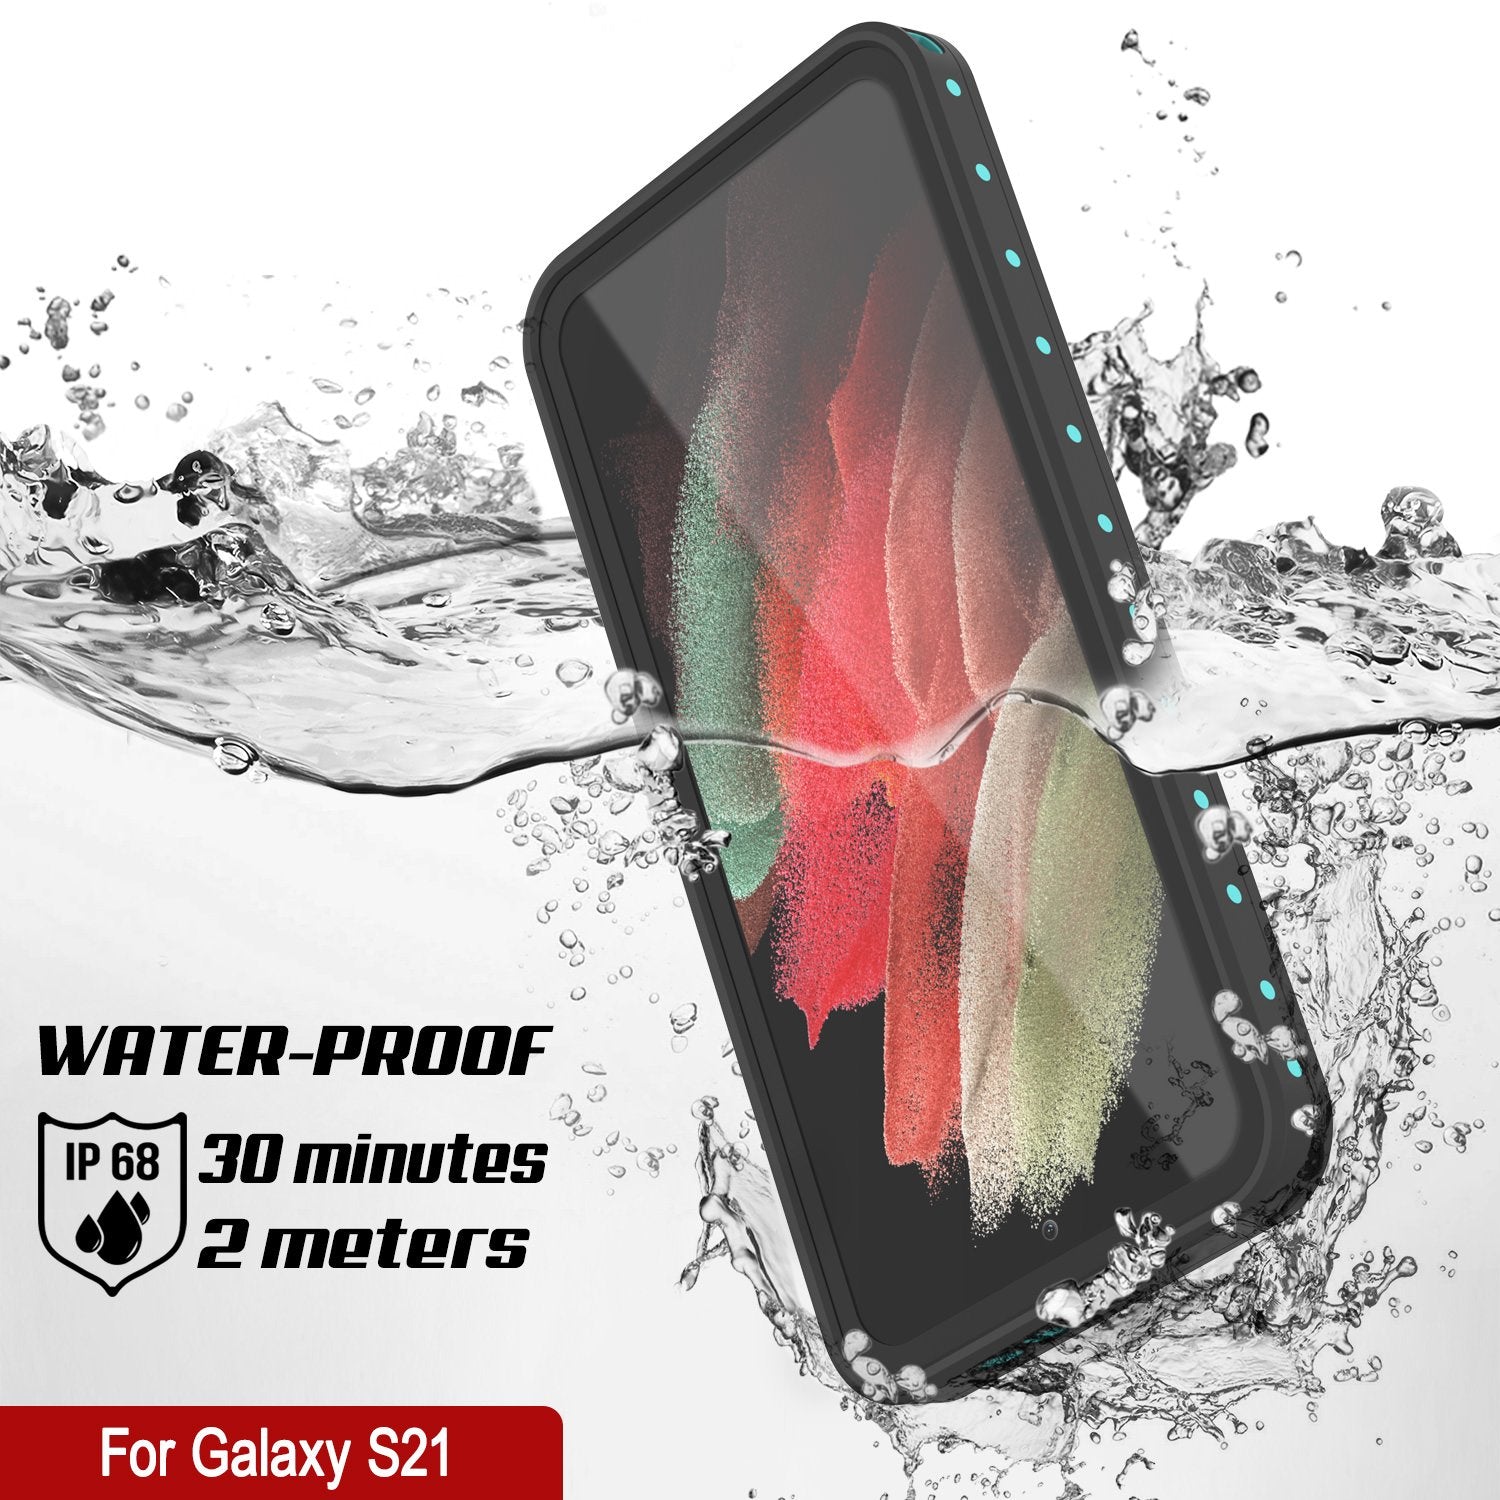 Galaxy S21 Waterproof Case PunkCase StudStar Teal Thin 6.6ft Underwater IP68 Shock/Snow Proof